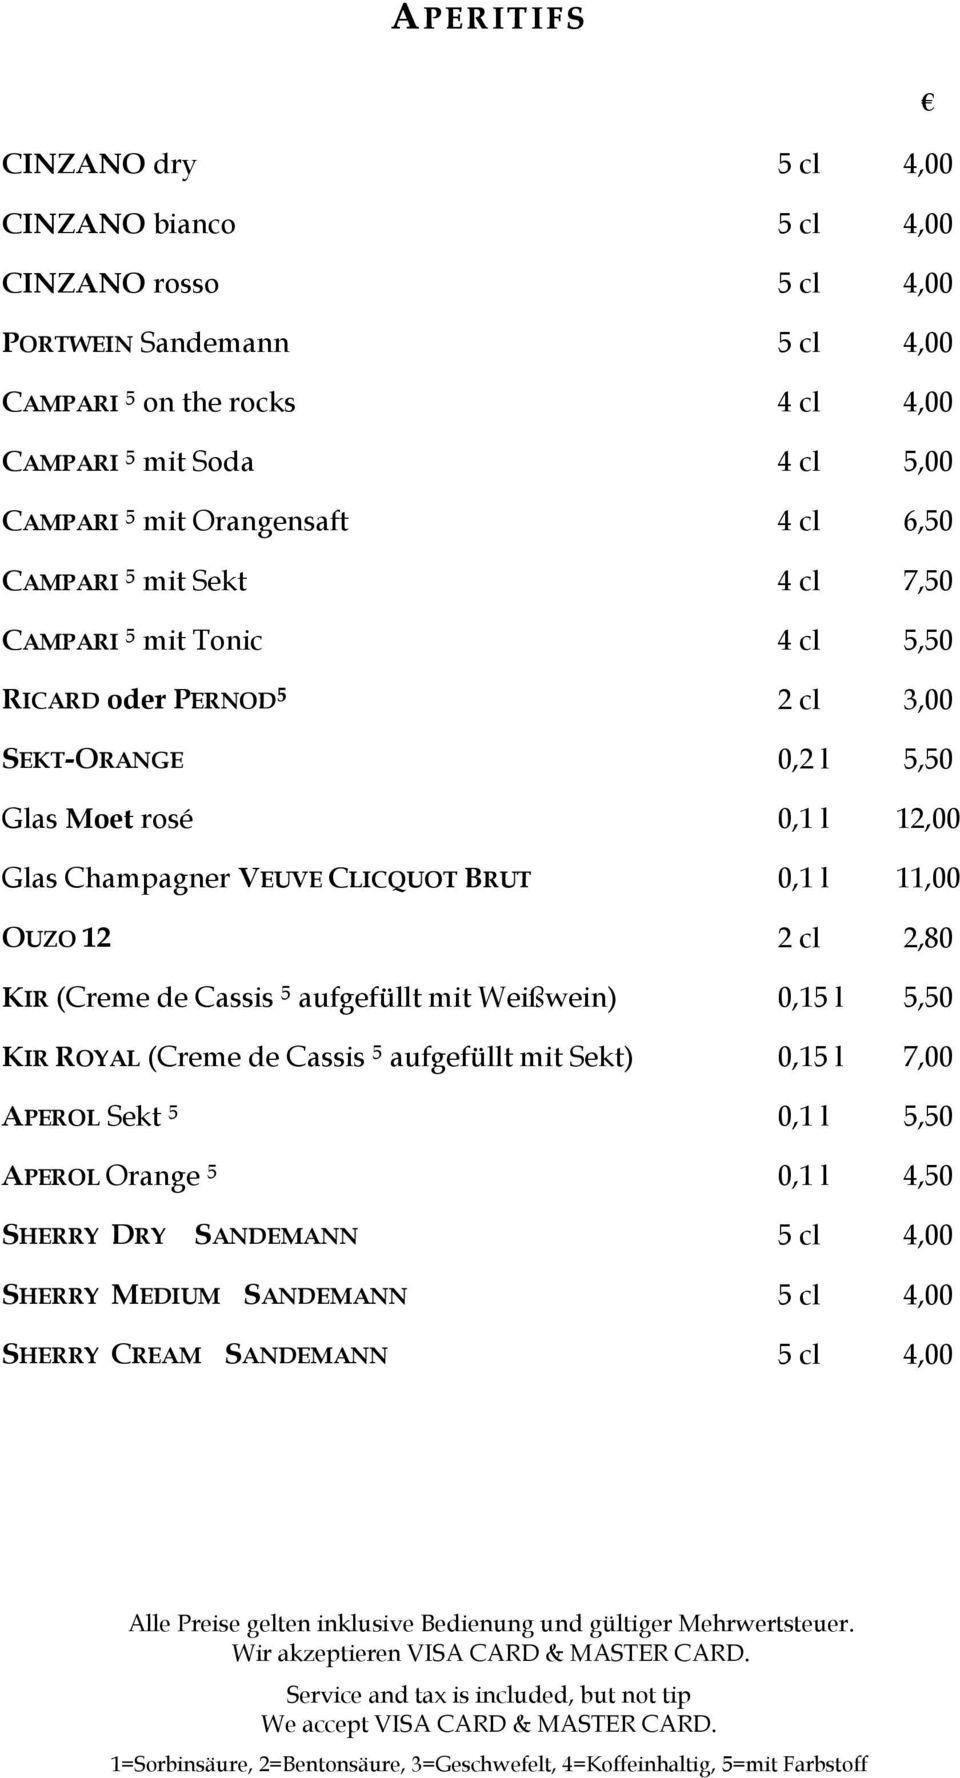 12,00 Glas Champagner VEUVE CLICQUOT BRUT 0,1 l 11,00 OUZO 12 2 cl 2,80 KIR (Creme de Cassis 5 aufgefüllt mit Weißwein) 0,15 l 5,50 KIR ROYAL (Creme de Cassis 5 aufgefüllt